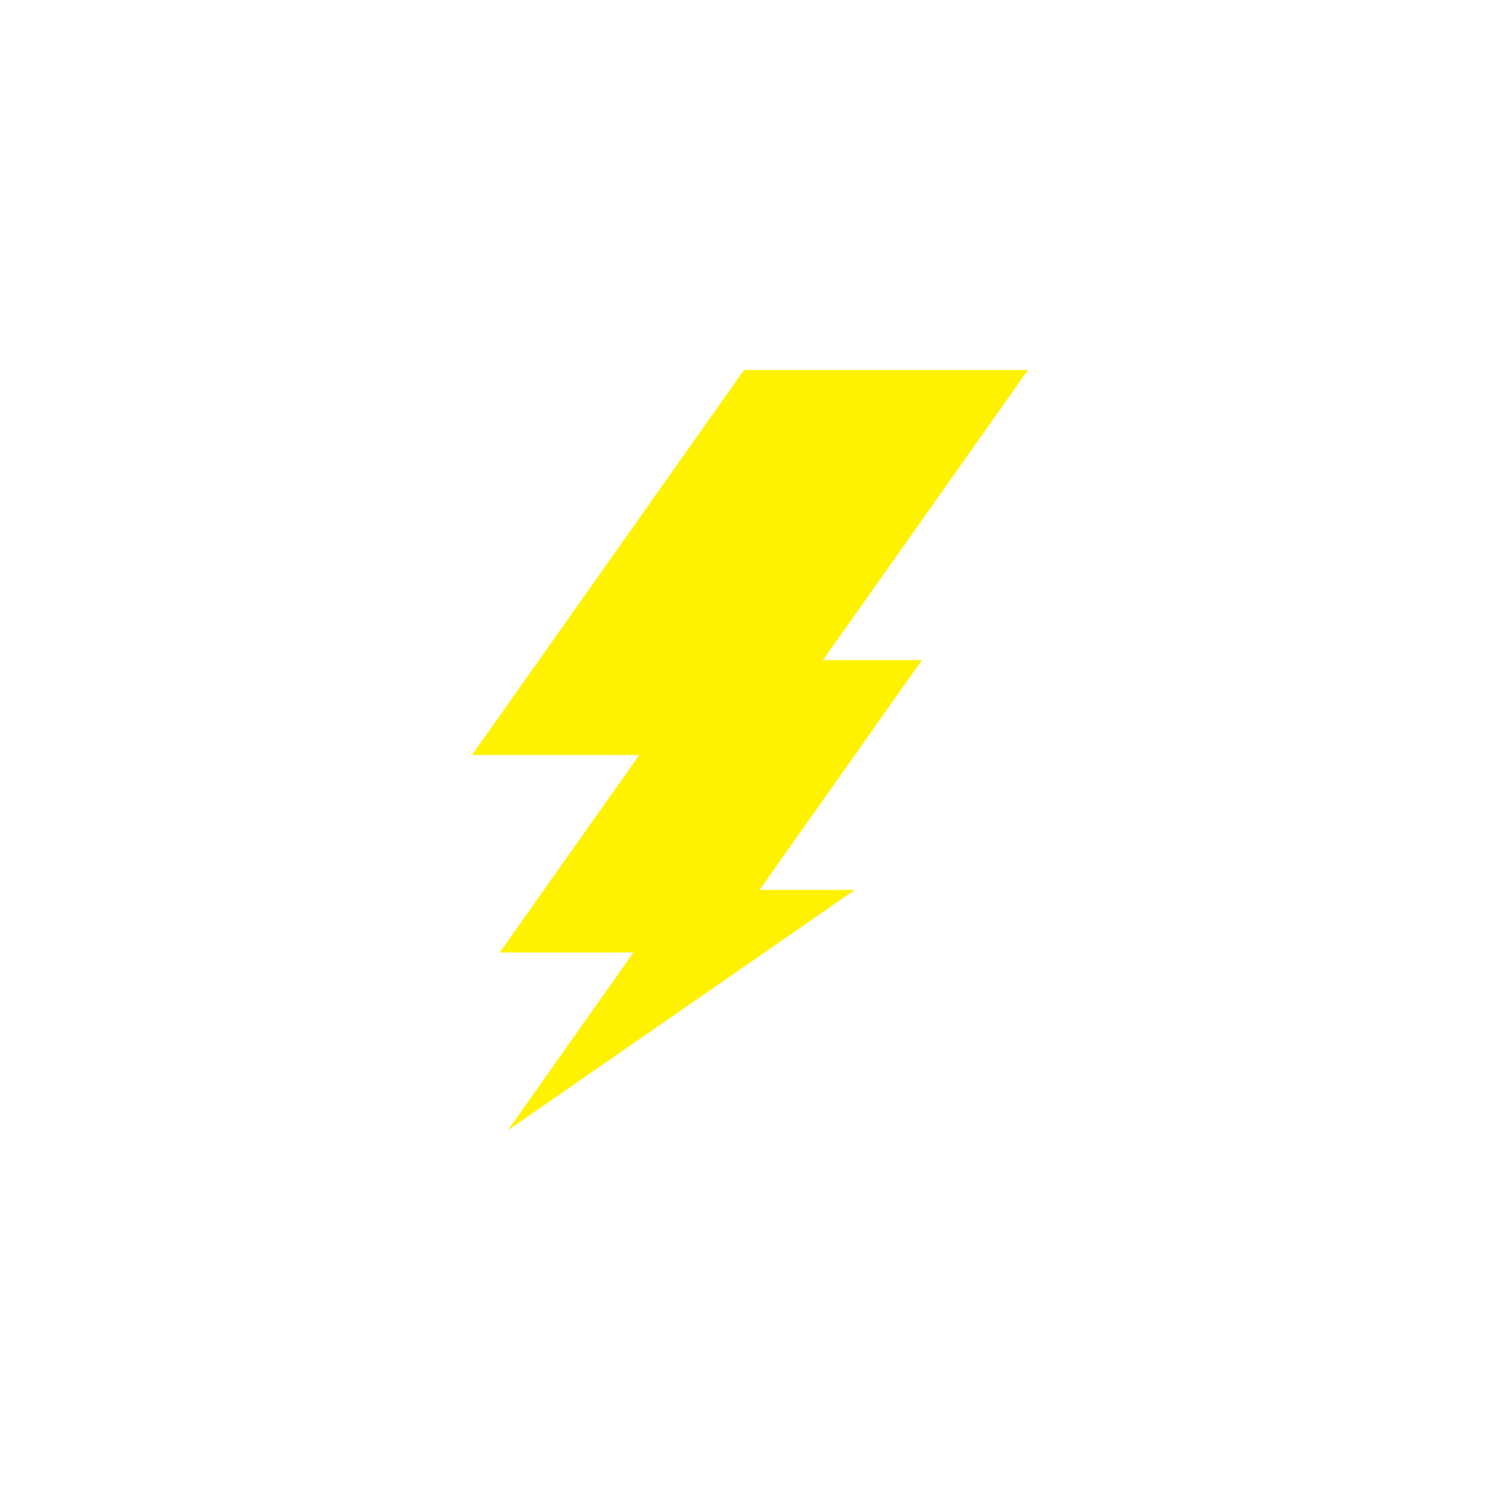 Carolina Electrical Contractors